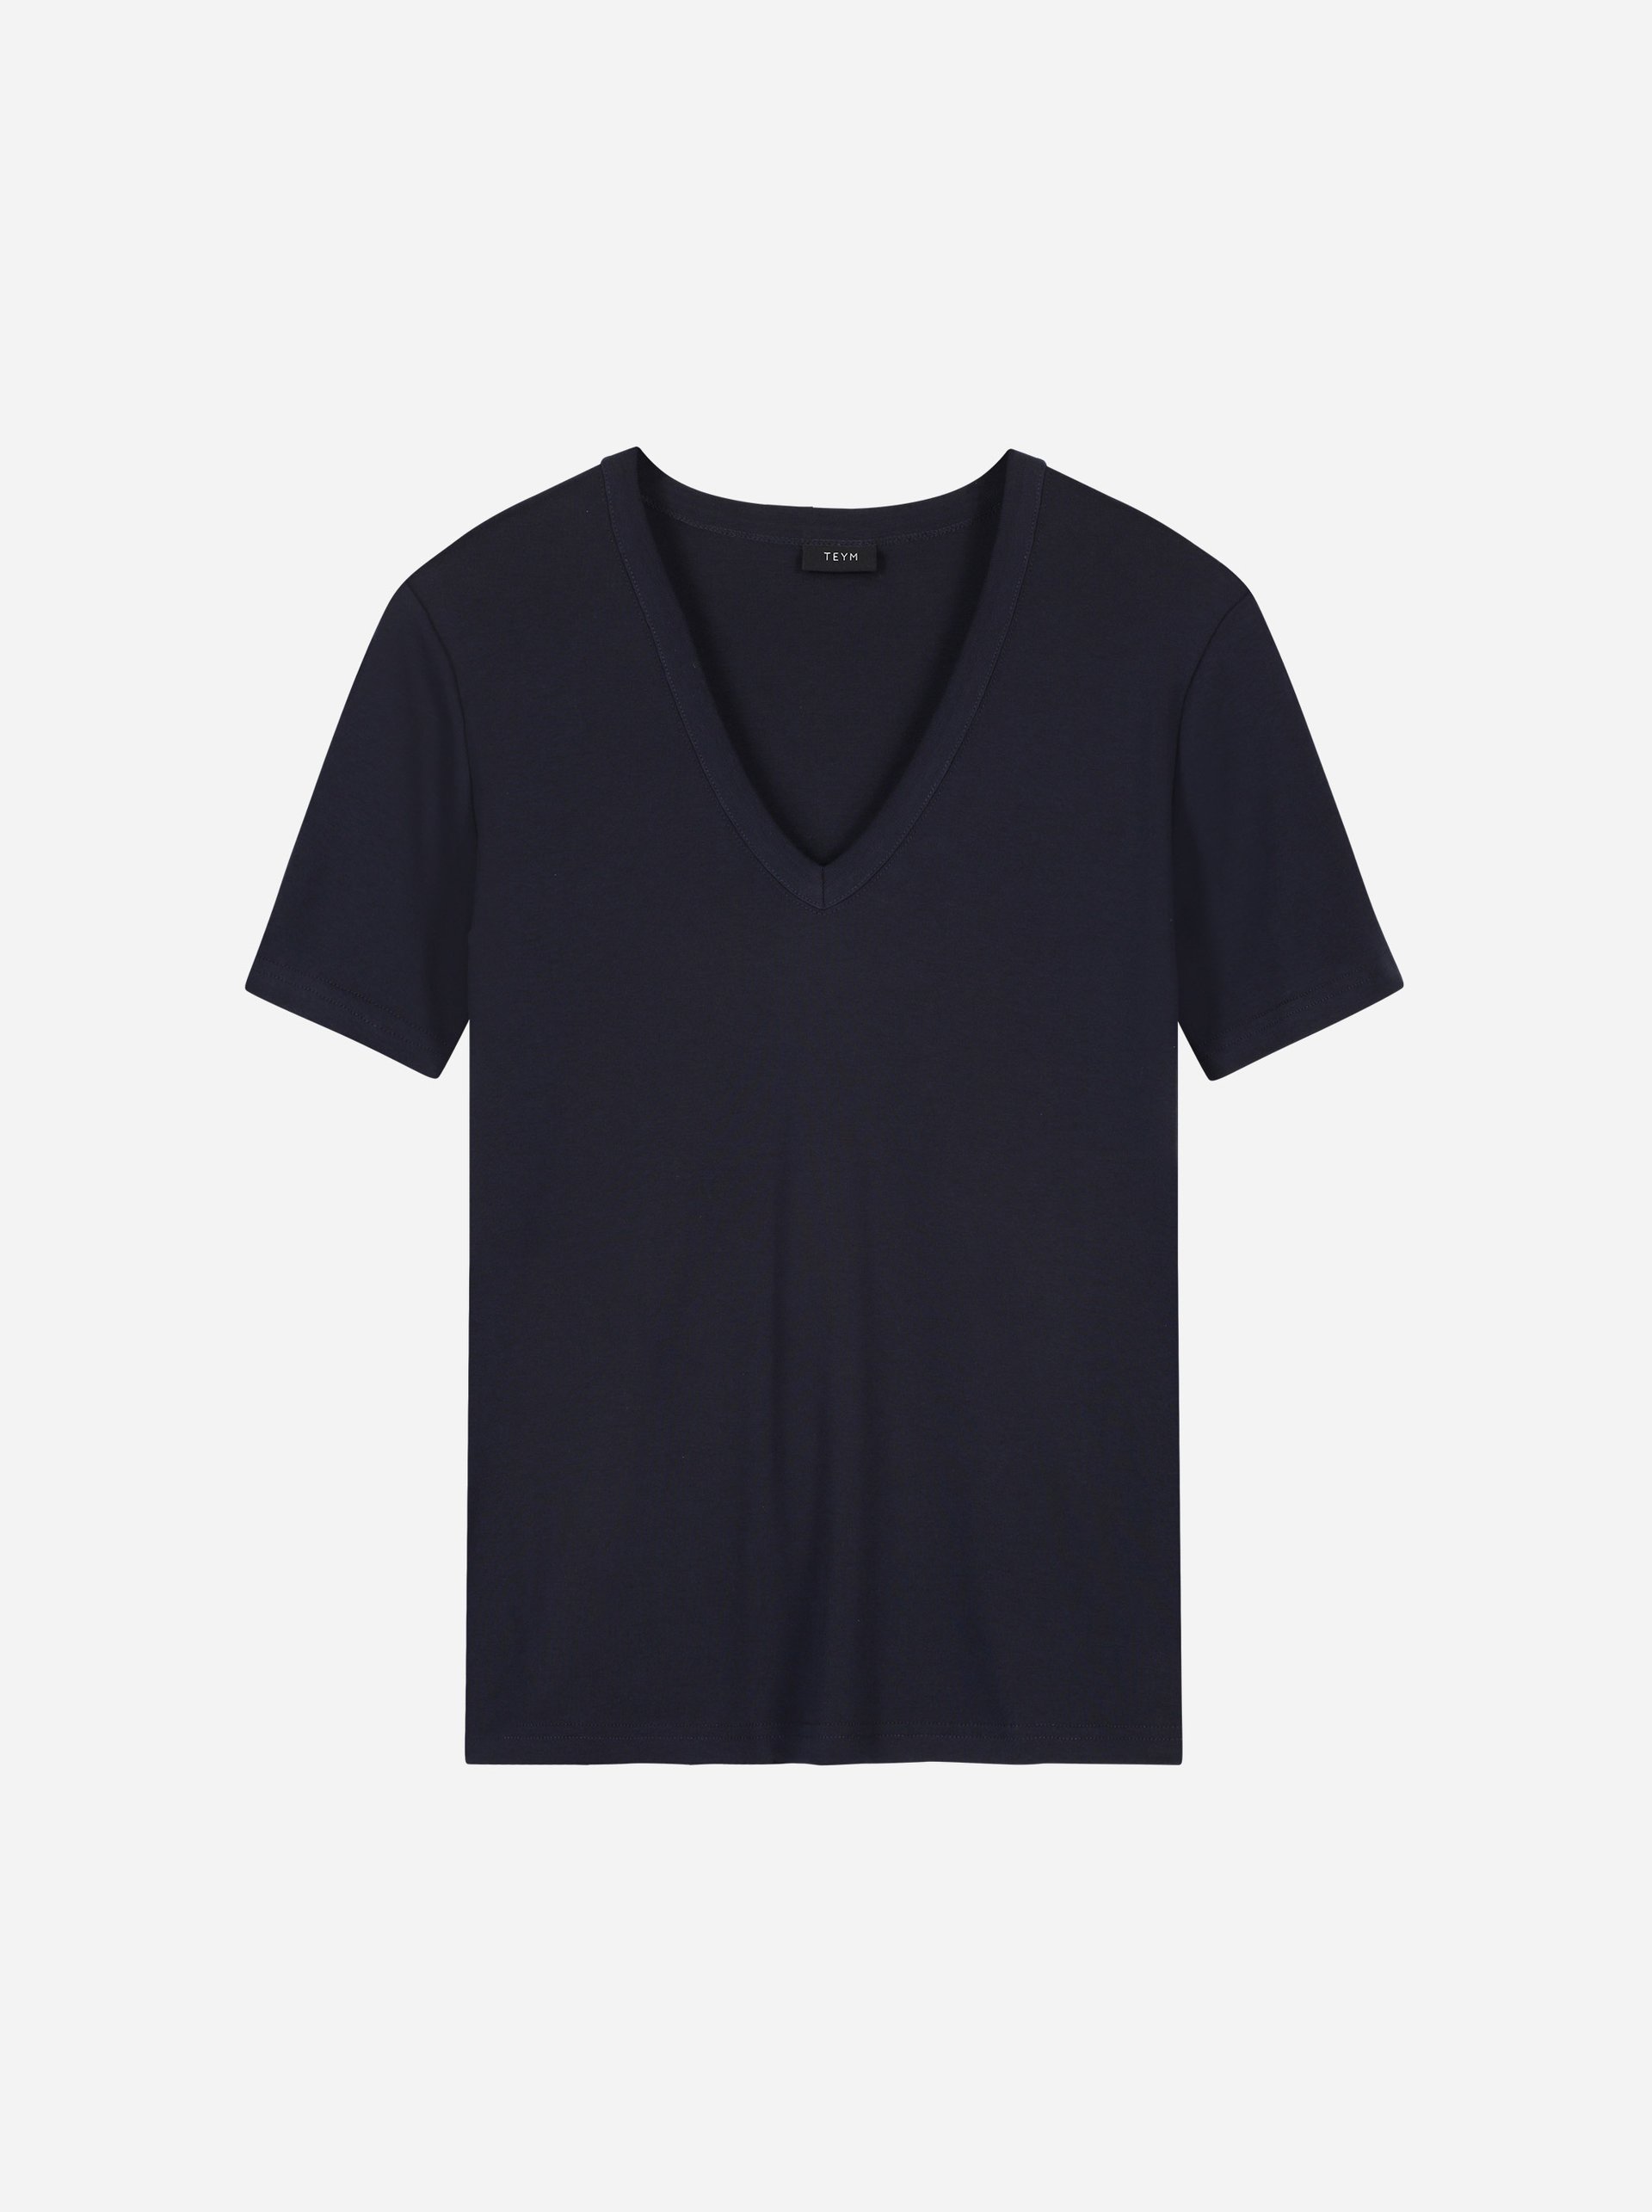 Teym - The T-Shirt - V-Neck - Women - Blue - 6